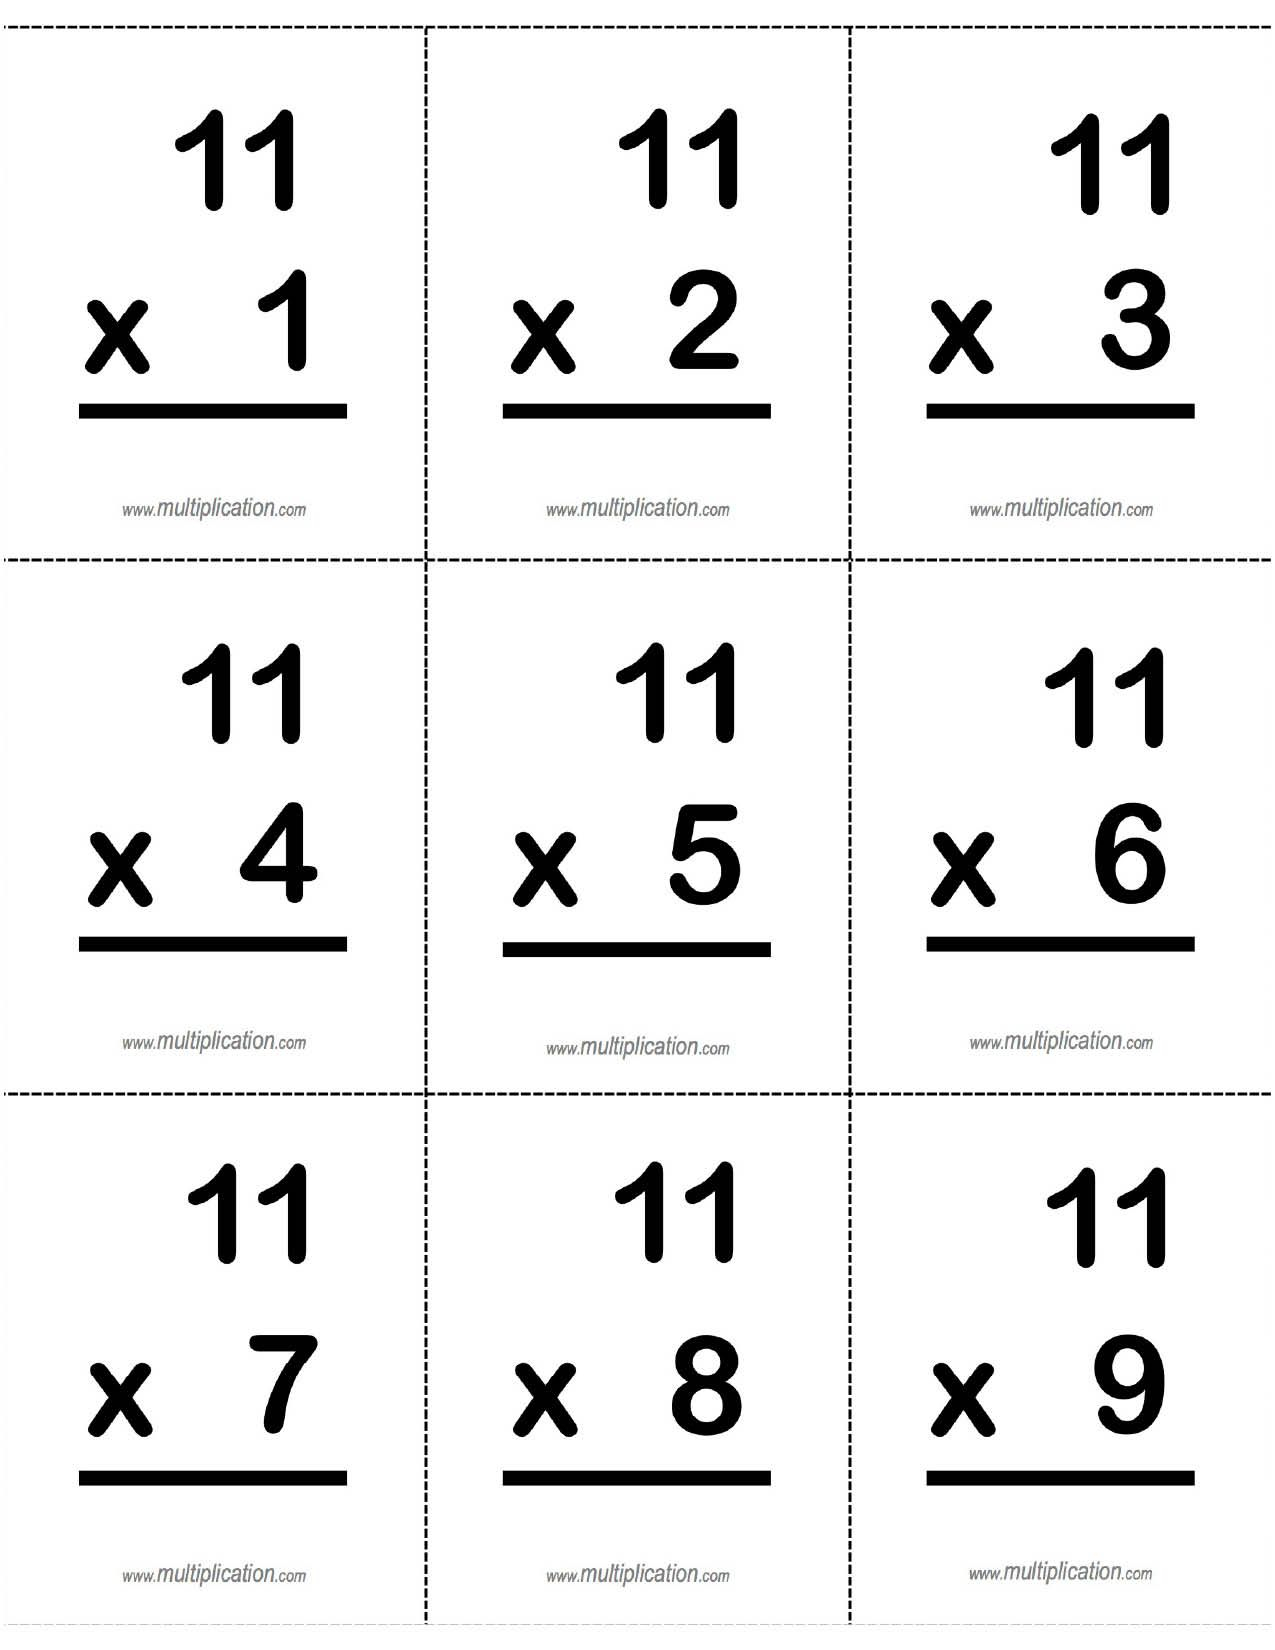 multiplication flash cards